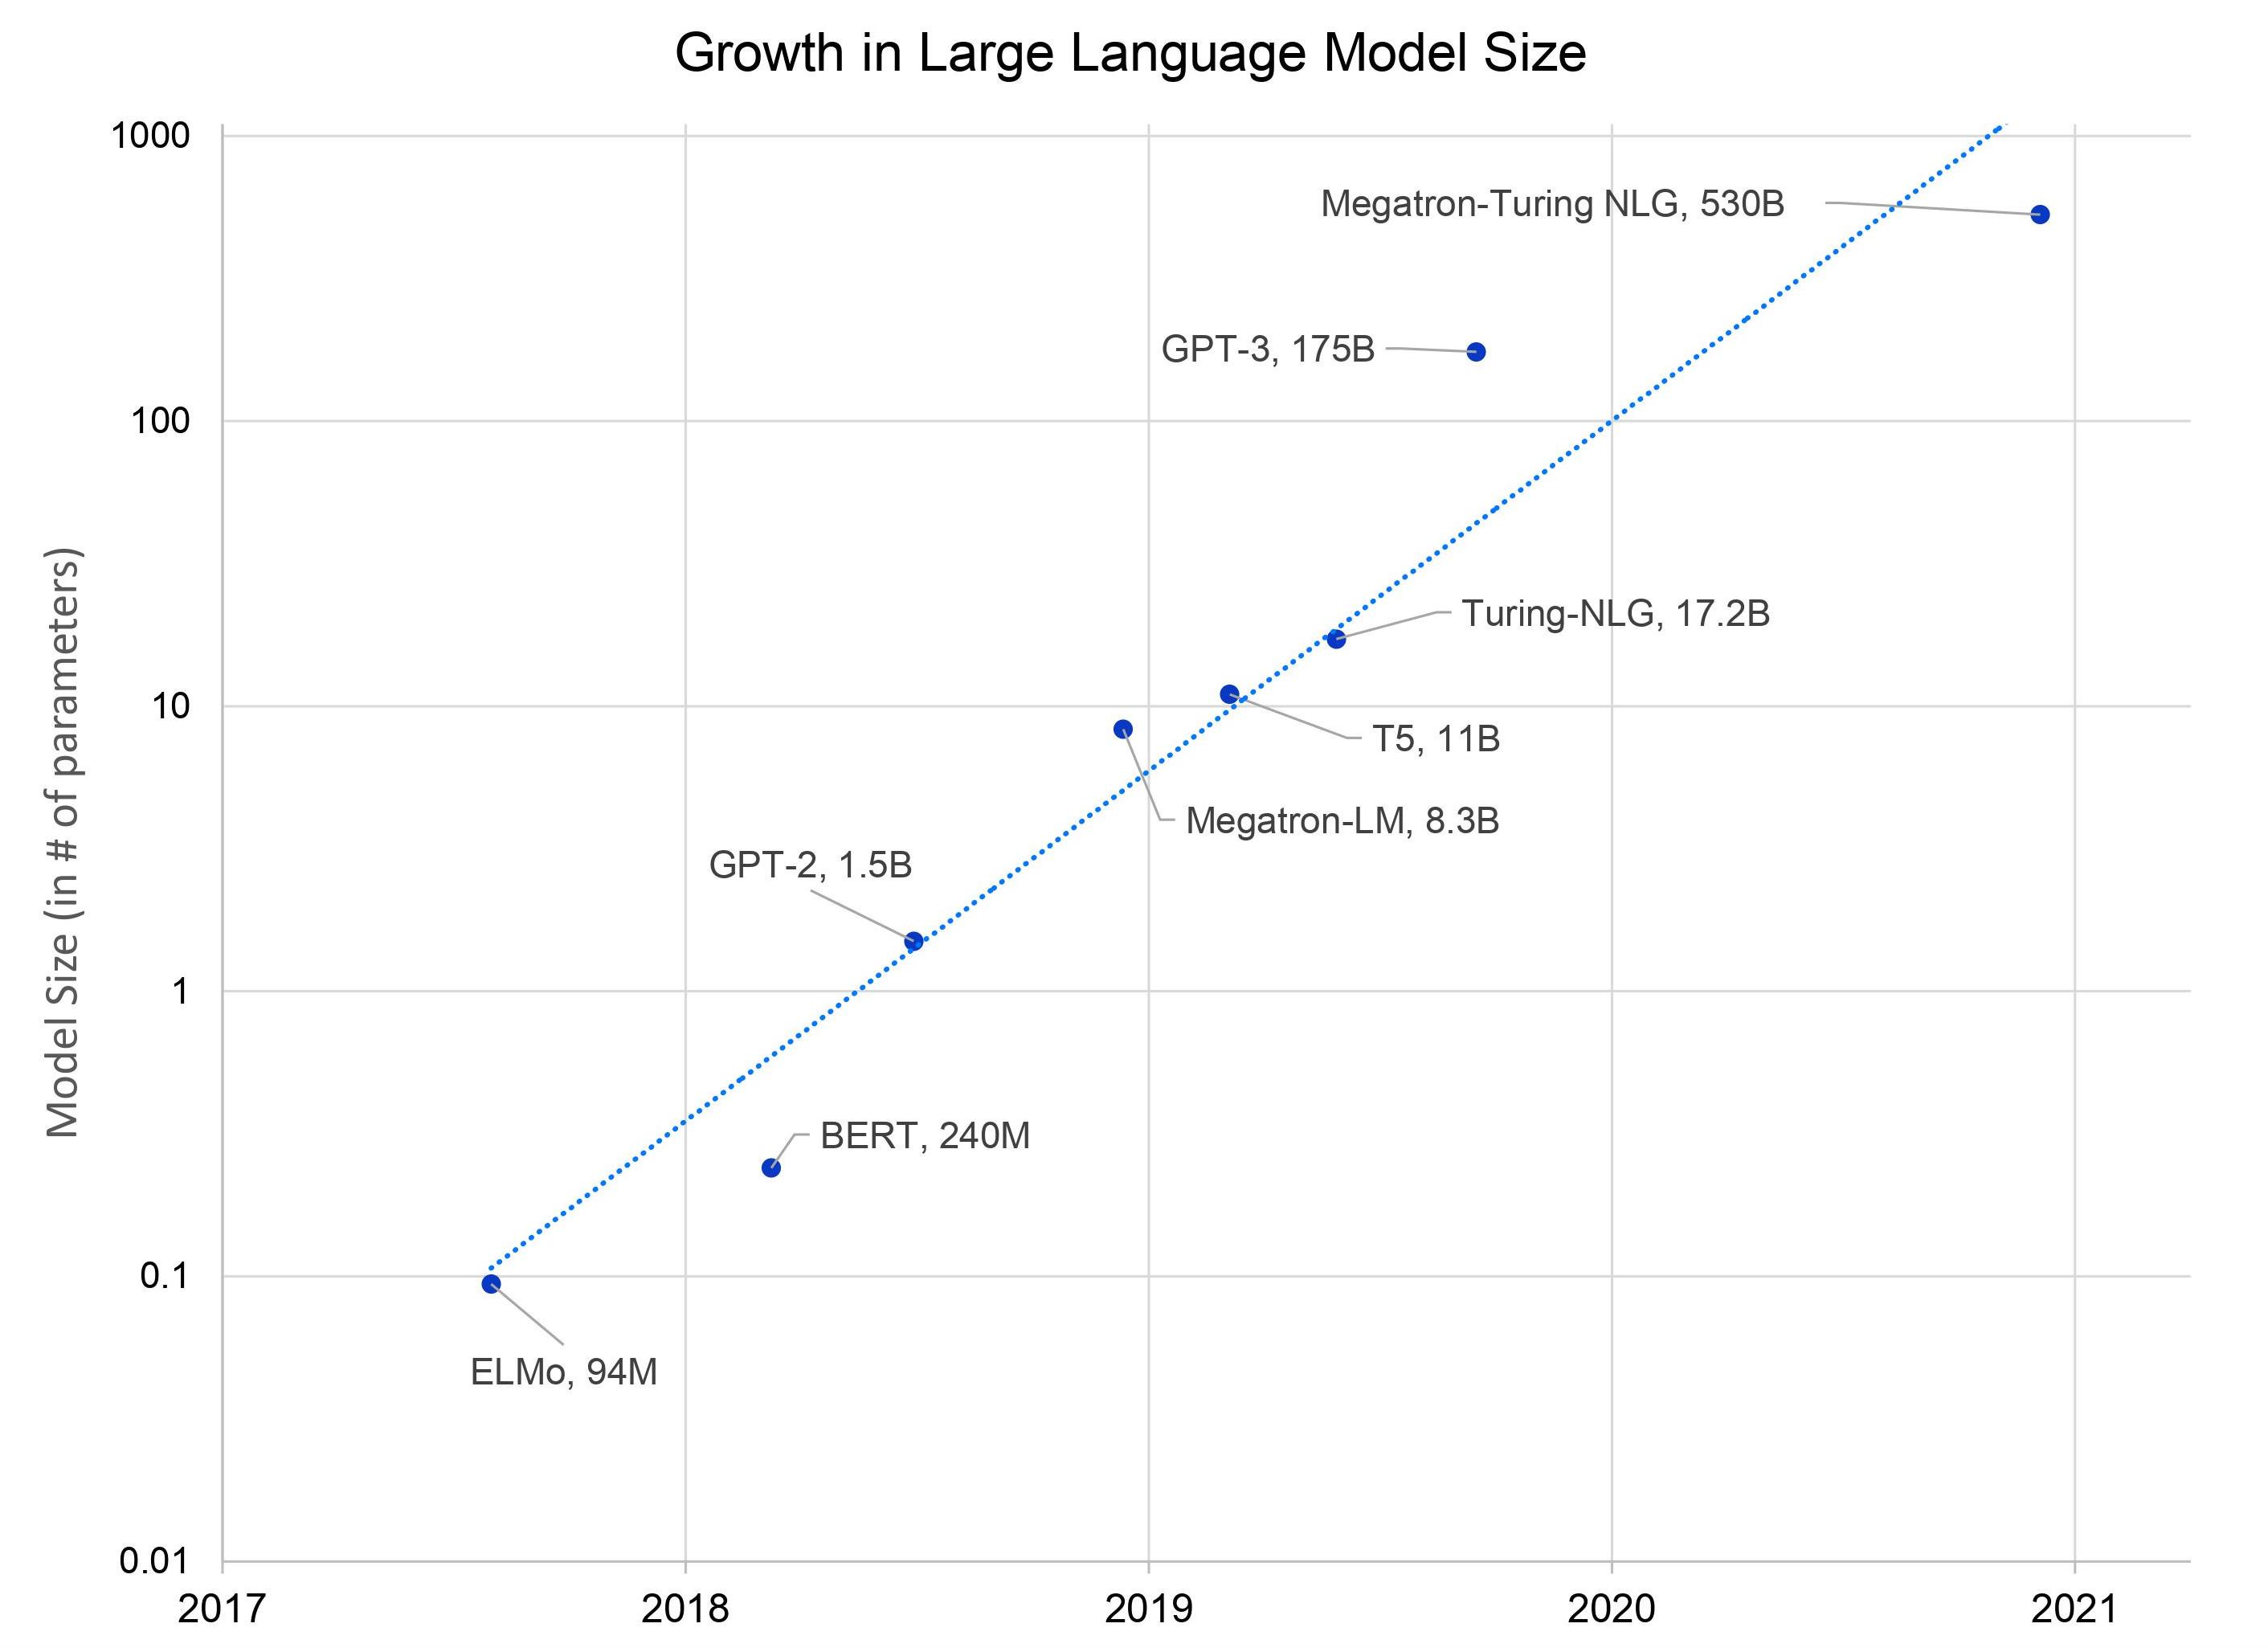 Large Language Models Will Redefine B2B Software